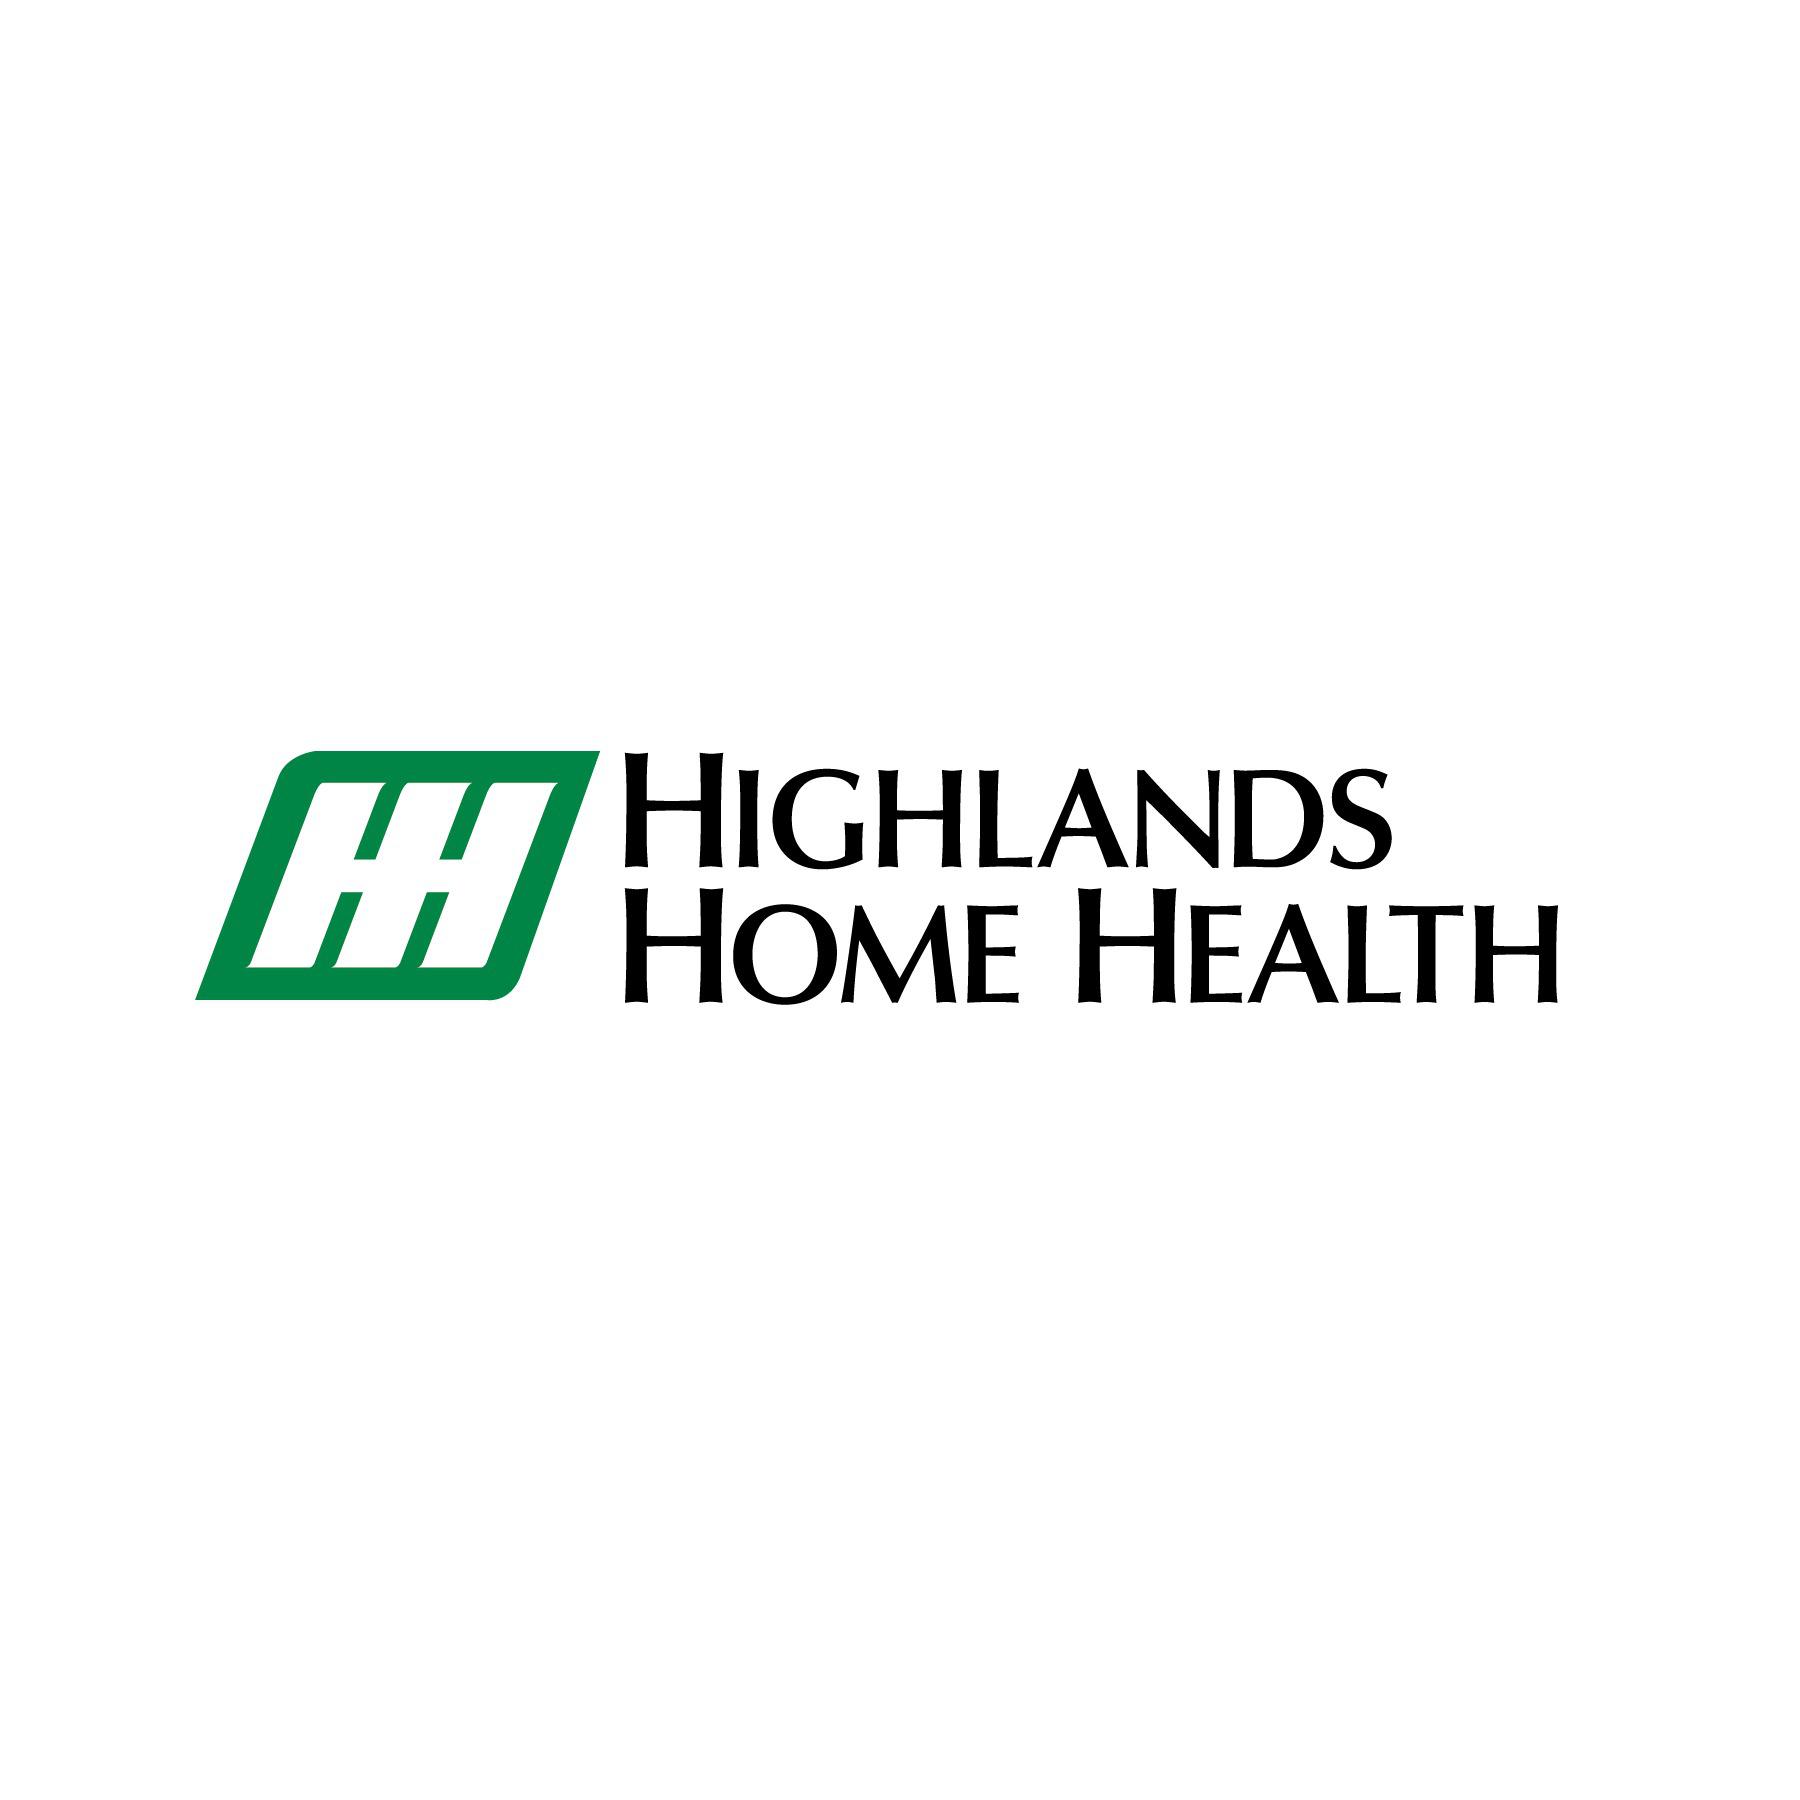 Highlands Home Health